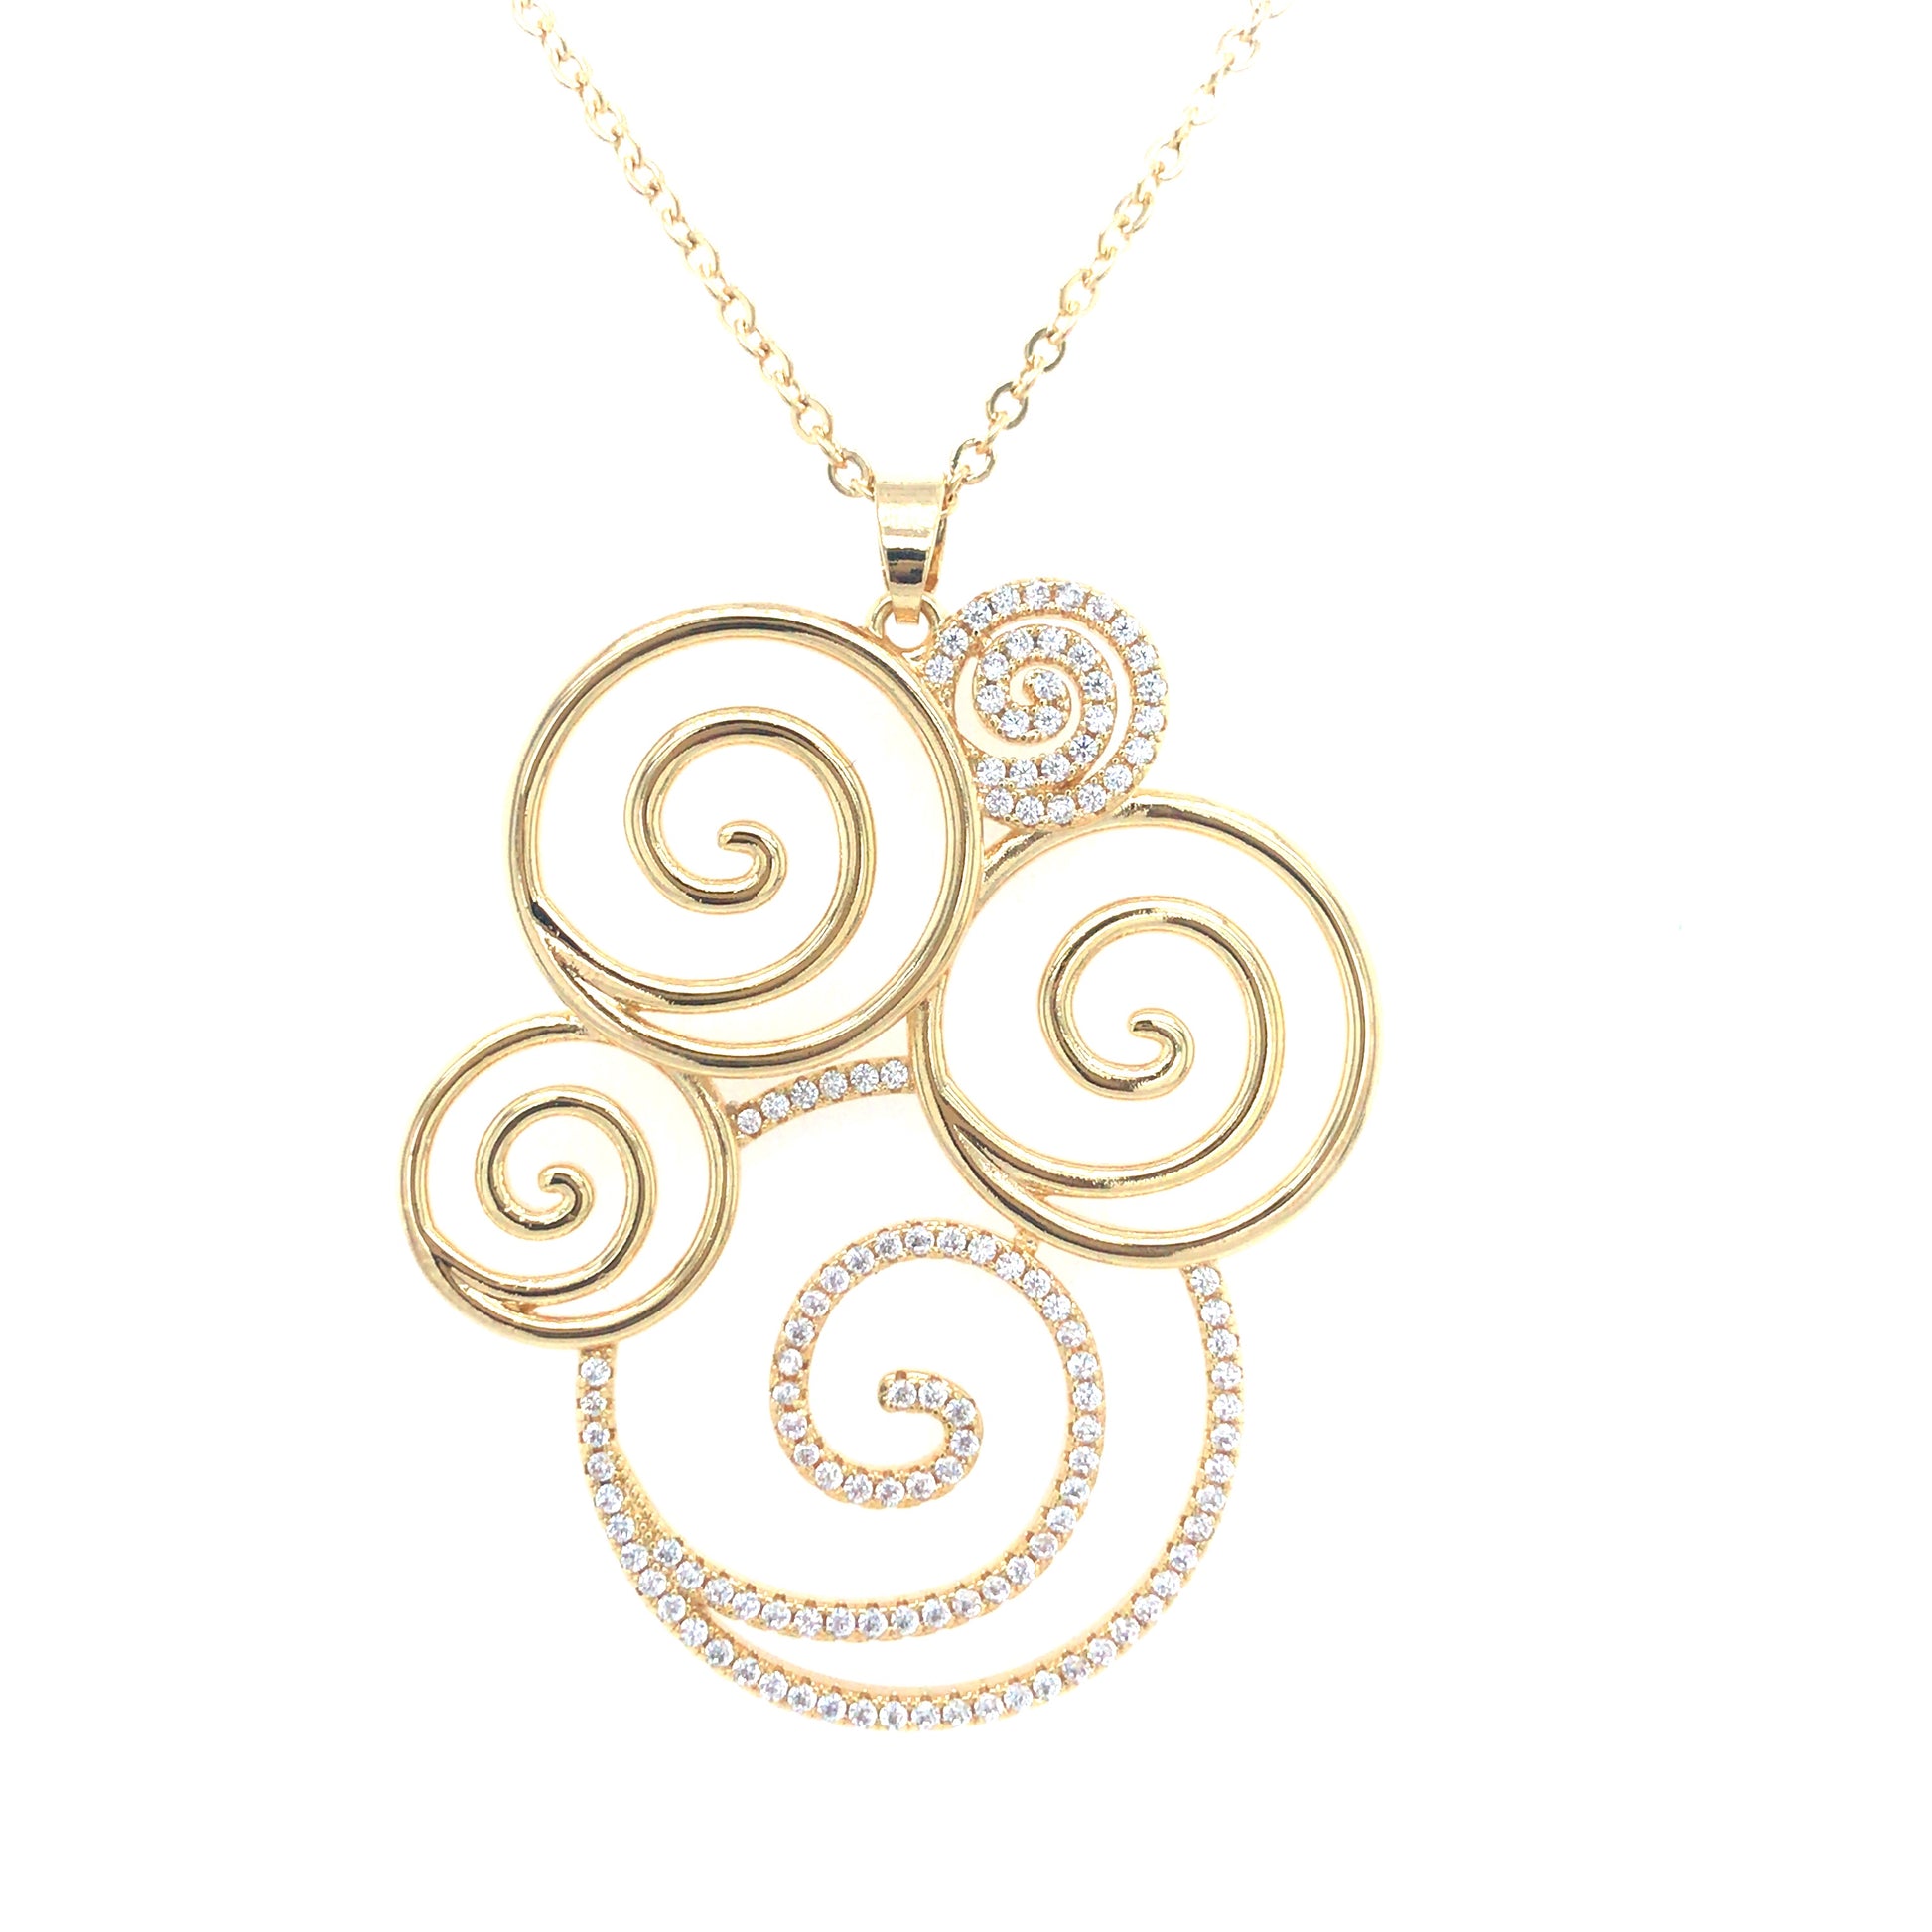 Overlapping Swirls Pendant - HK Jewels